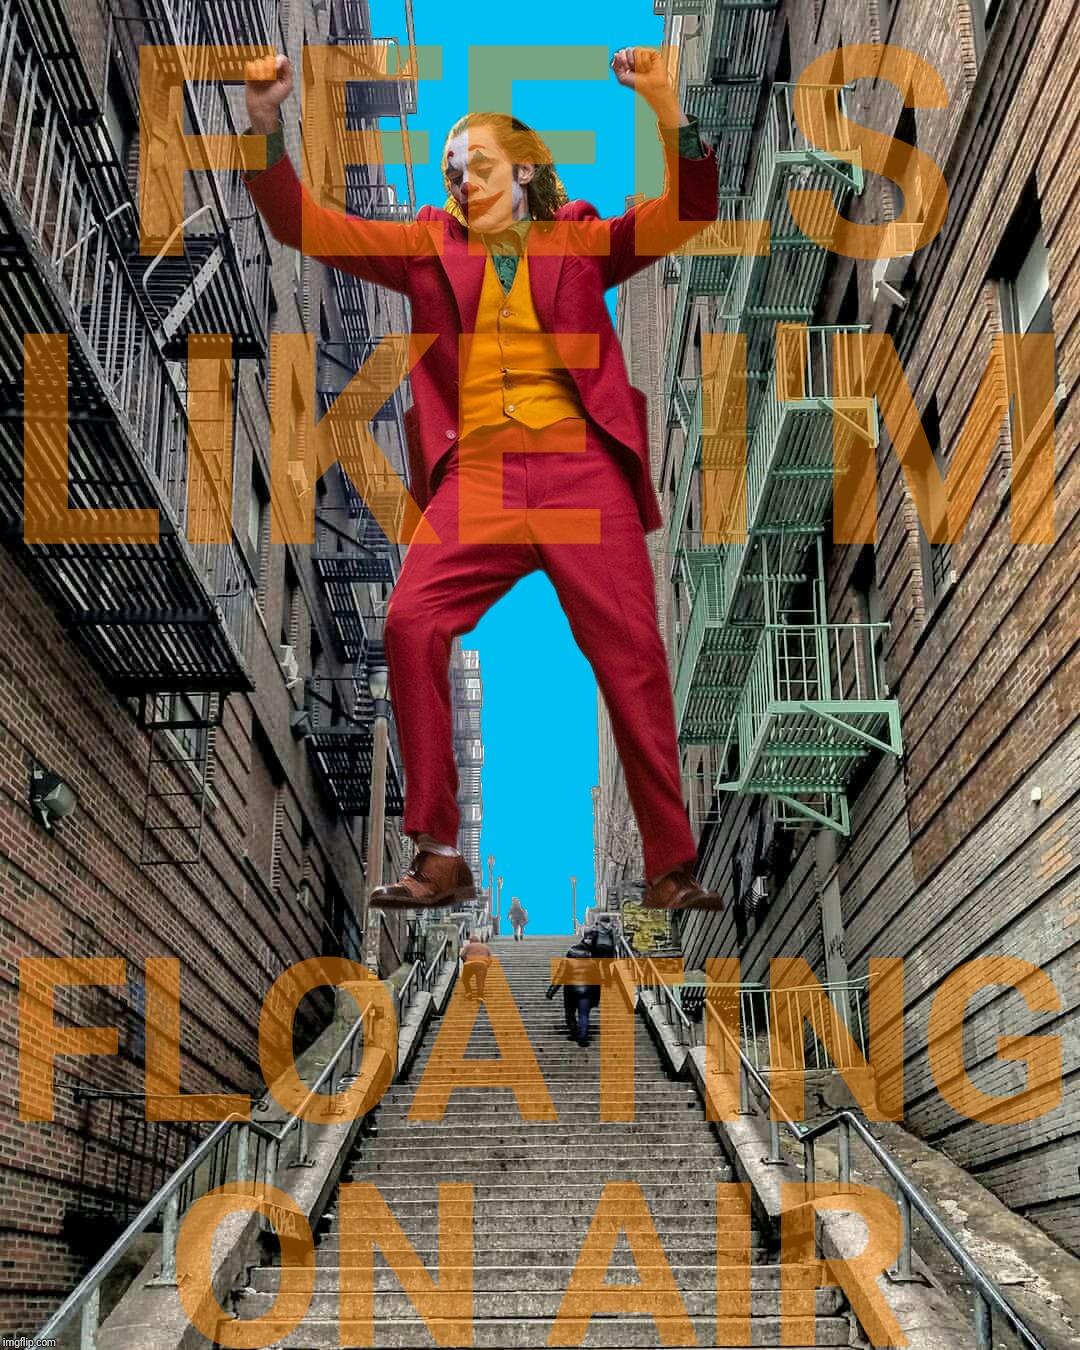 Imgflip is like that | FEELS LIKE I'M FLOATING ON AIR | image tagged in joker stairs,joker dance,joker stair many,imgflip,streams,dreams | made w/ Imgflip meme maker